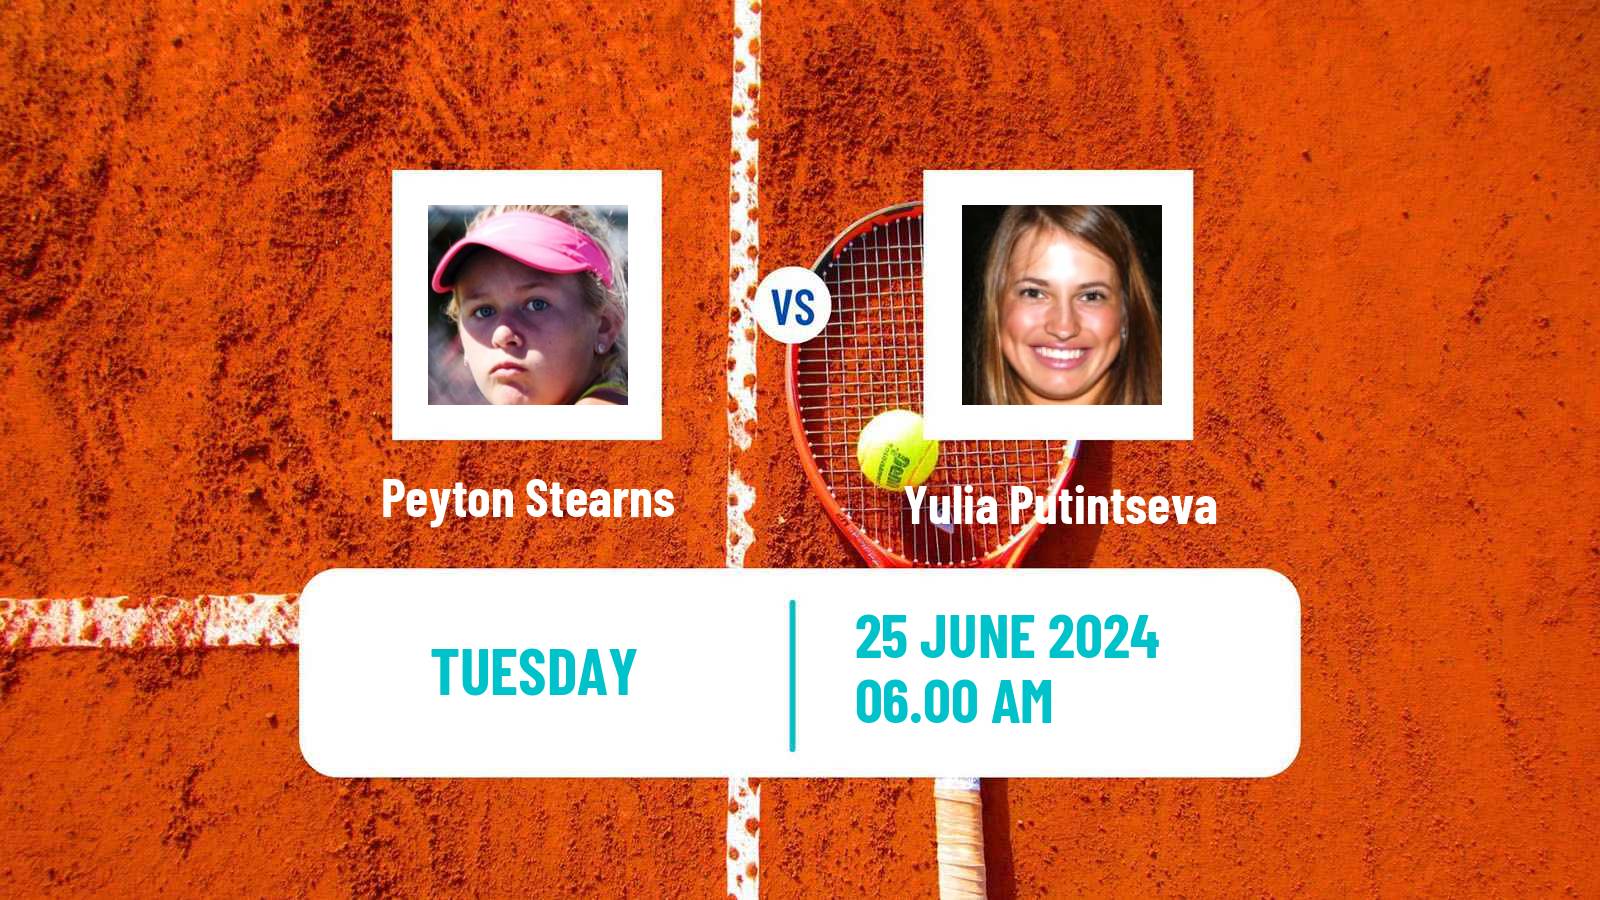 Tennis WTA Bad Homburg Peyton Stearns - Yulia Putintseva